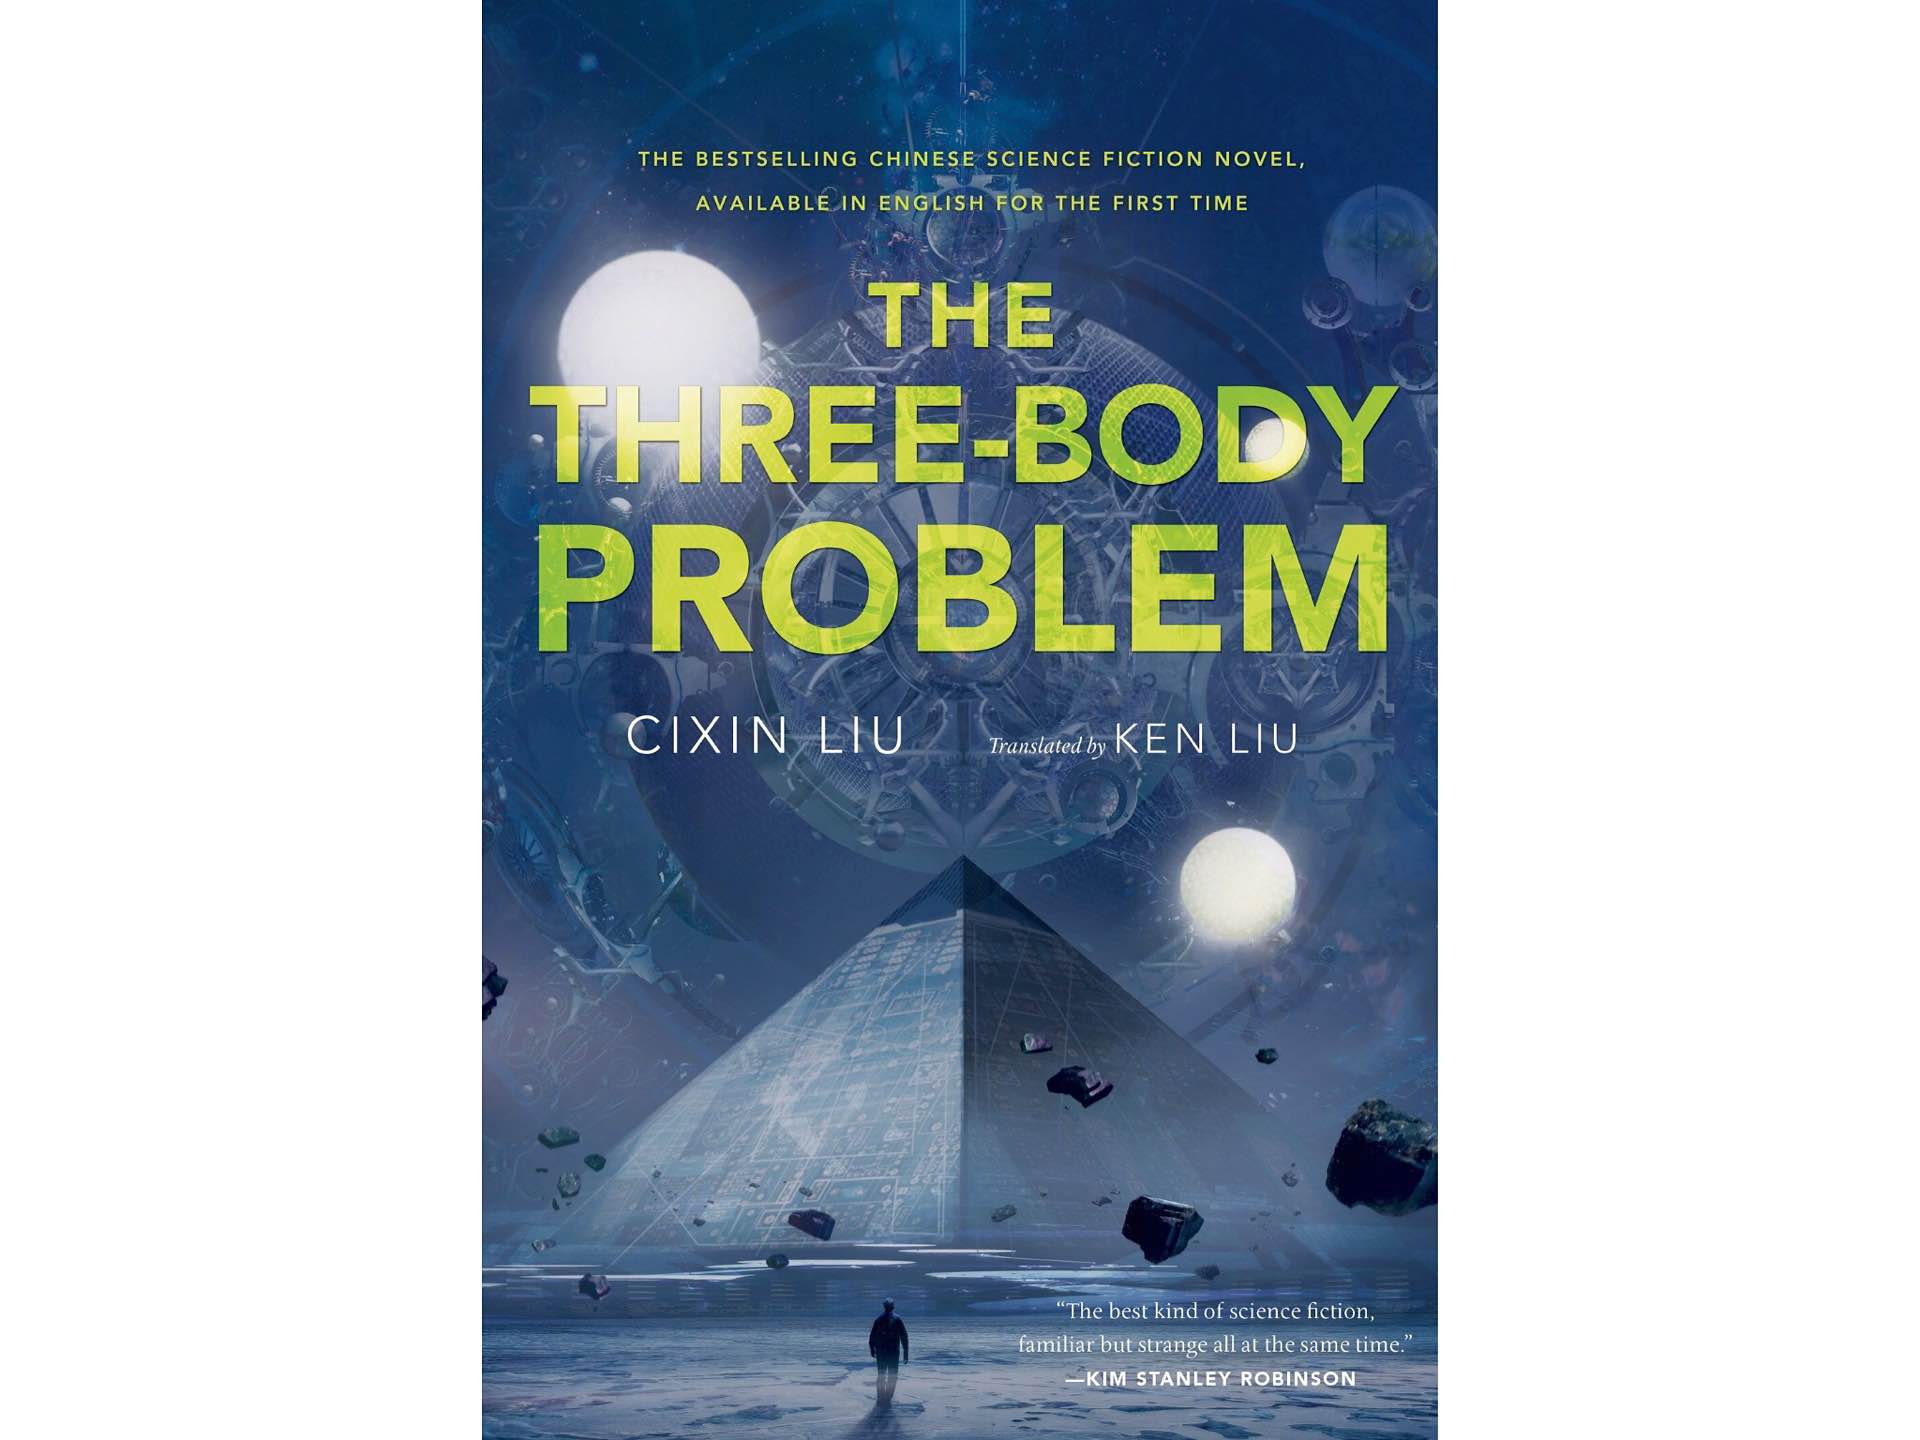 The Three-Body Problem by Liu Cixin.